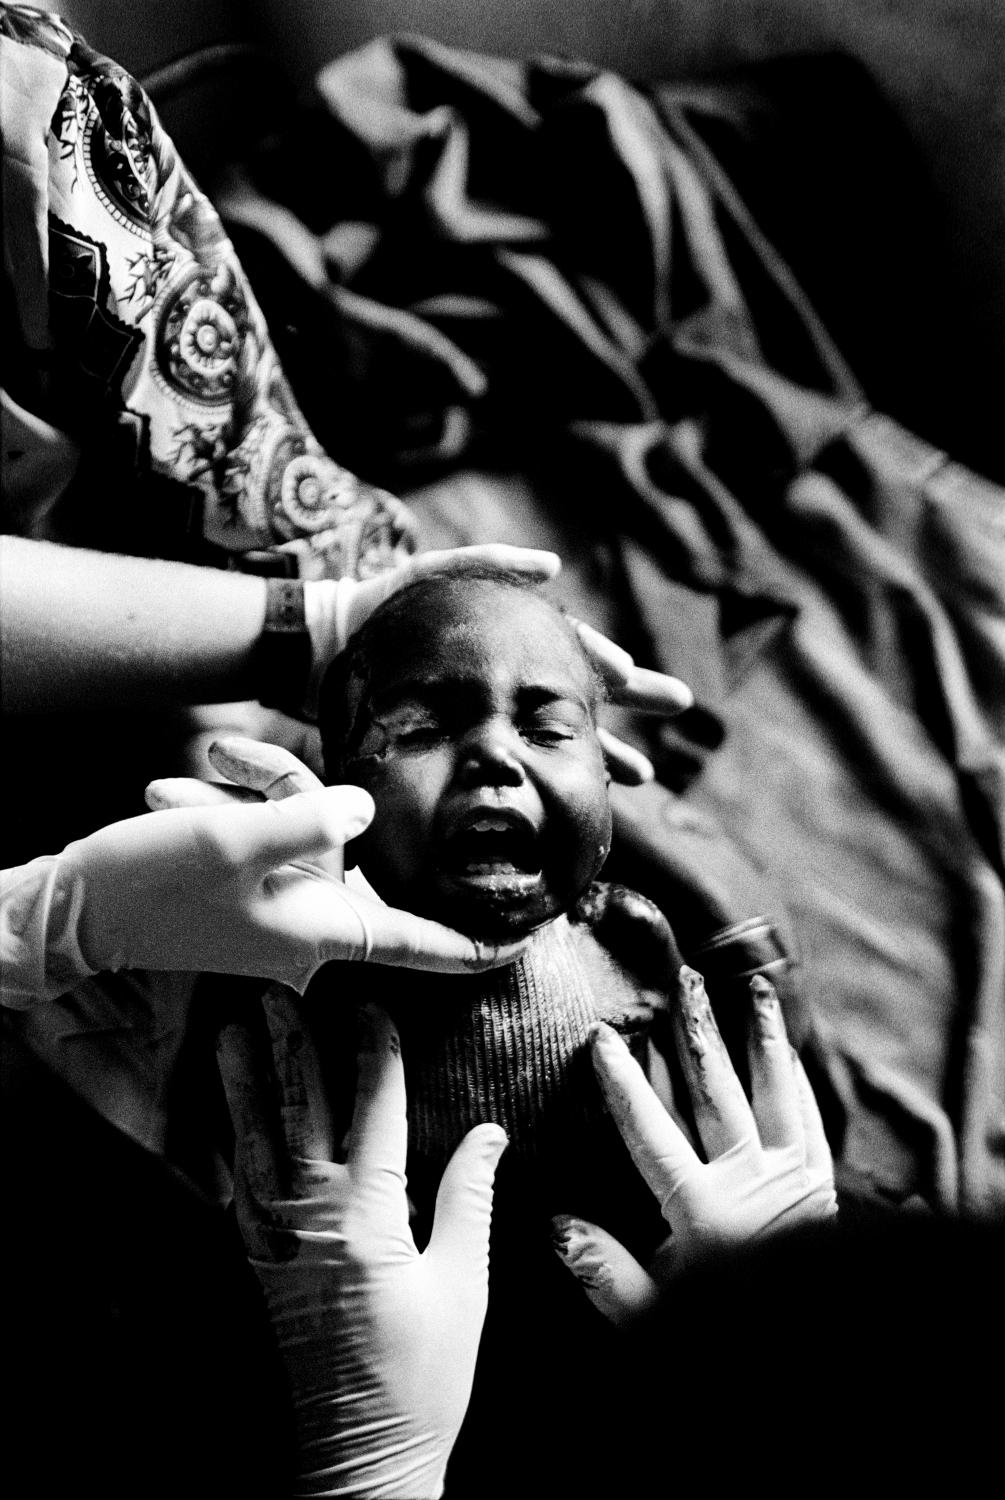 Darfur - SUDAN Golo, Darfur Doctors treating a wounded boy in Golo...